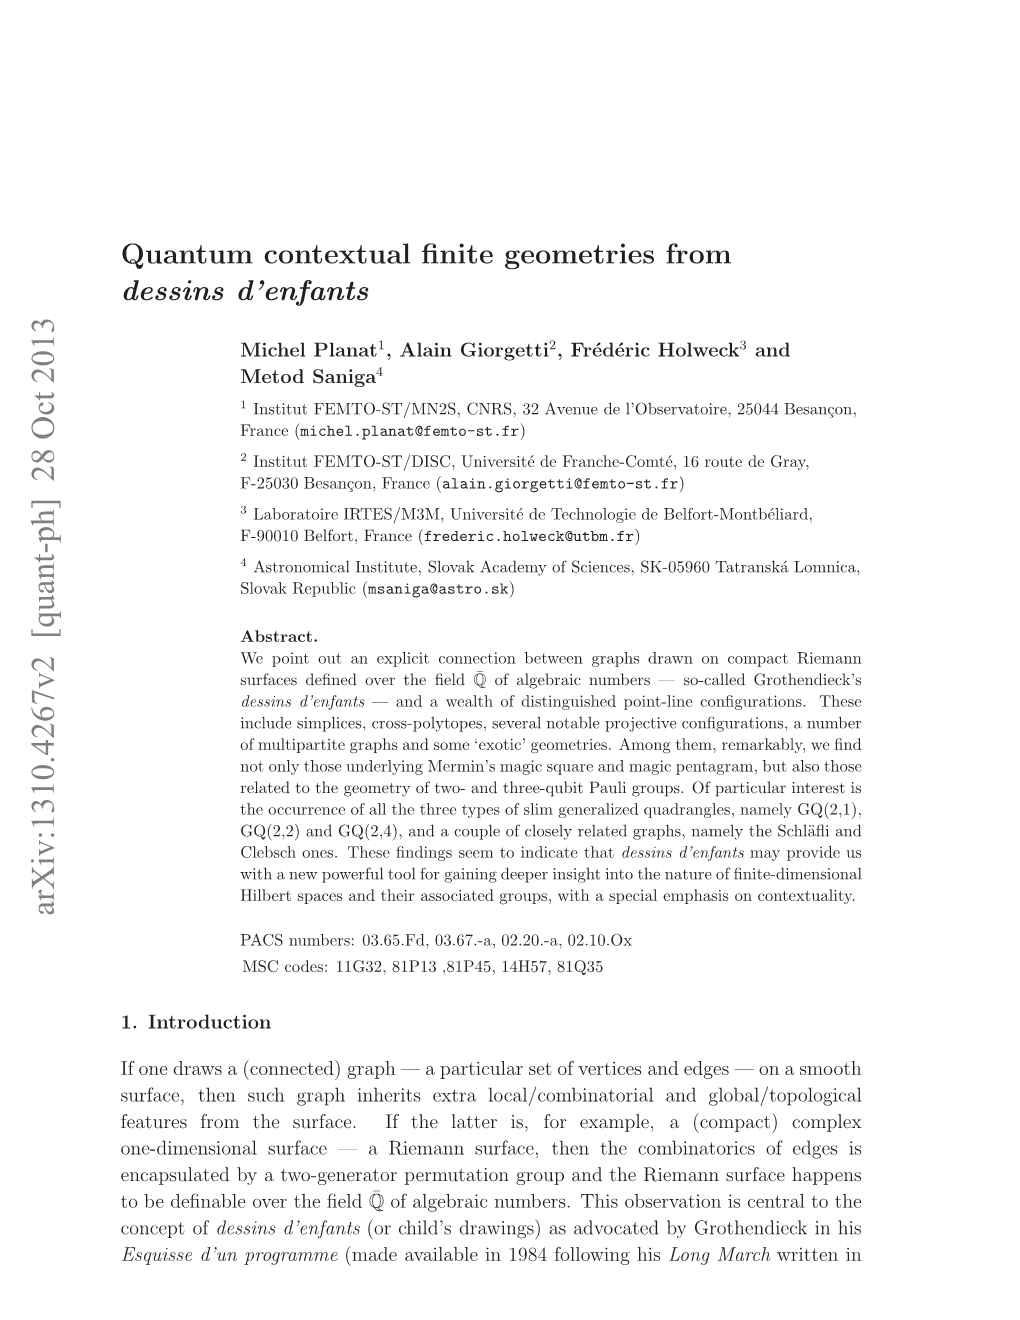 Quantum Contextual Finite Geometries from Dessins D'enfants